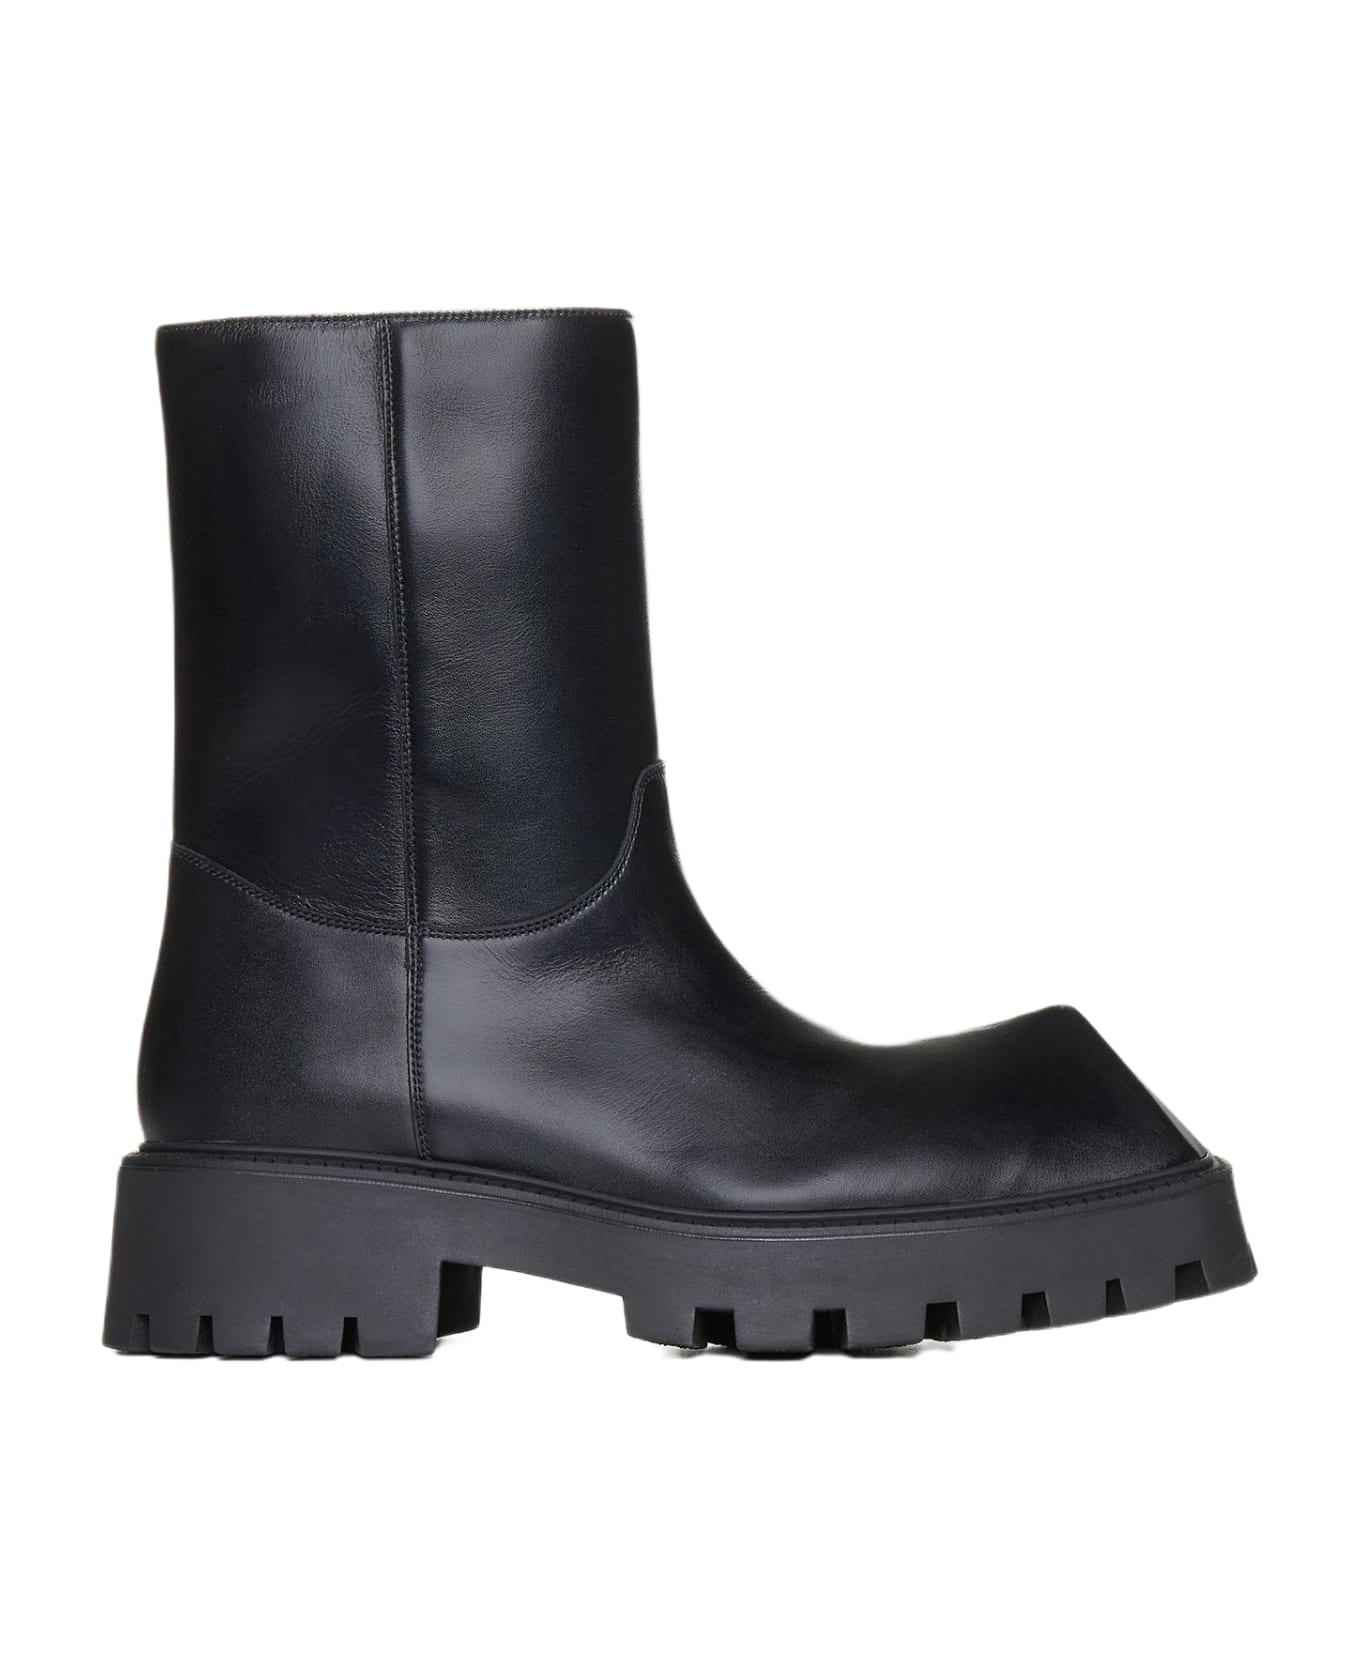 Balenciaga Rhino Leather Ankle Boots - Black